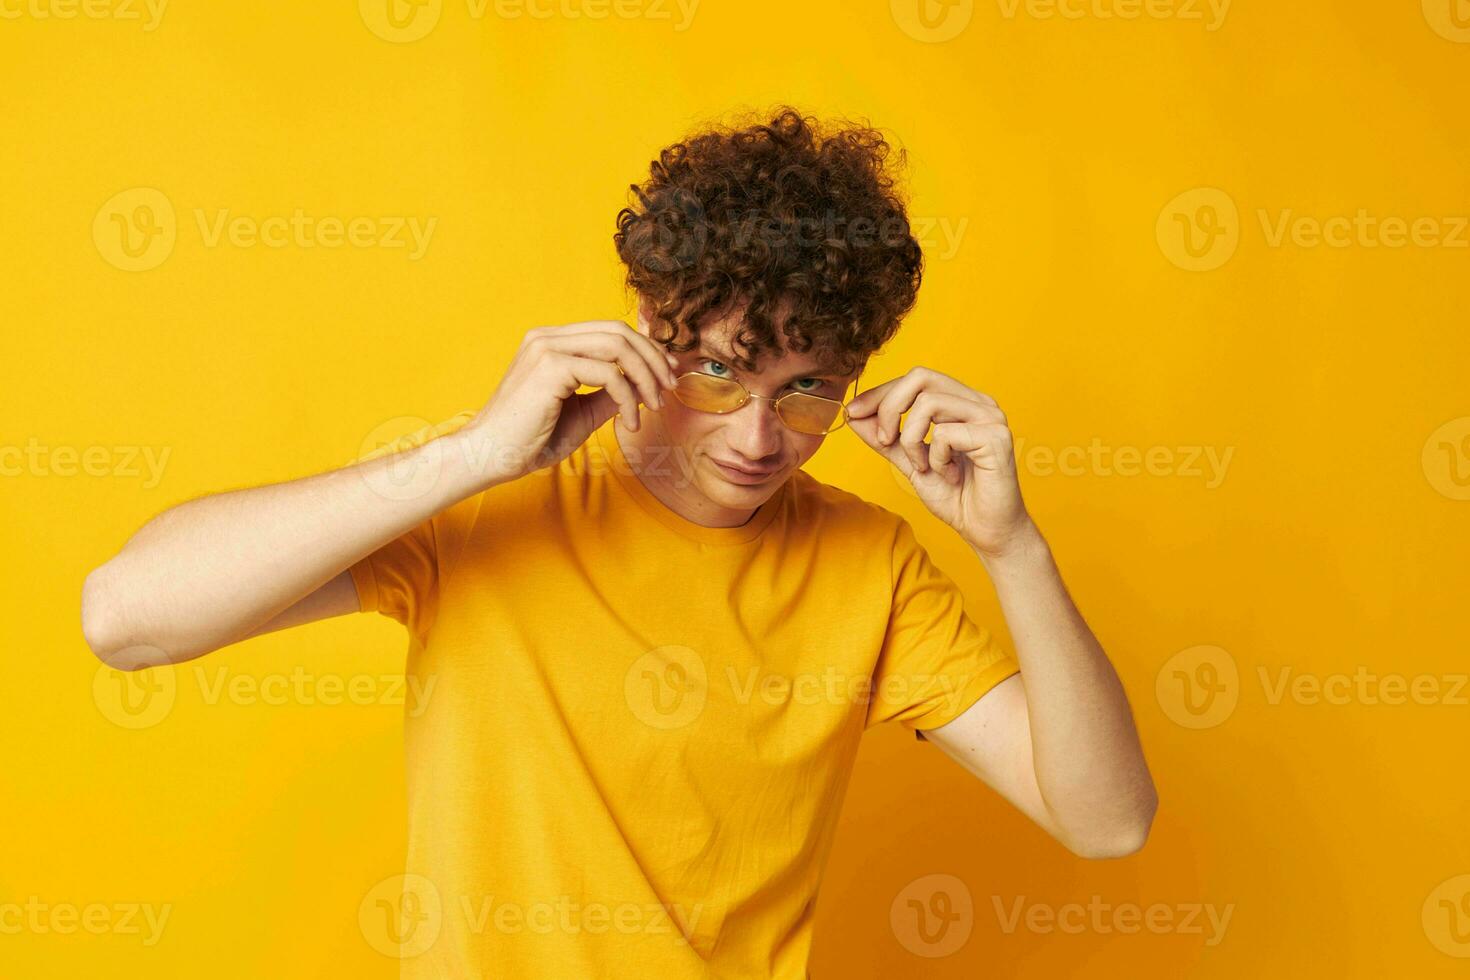 joven pelo rizado hombre amarillo camiseta lentes Moda mano gestos monocromo Disparo foto